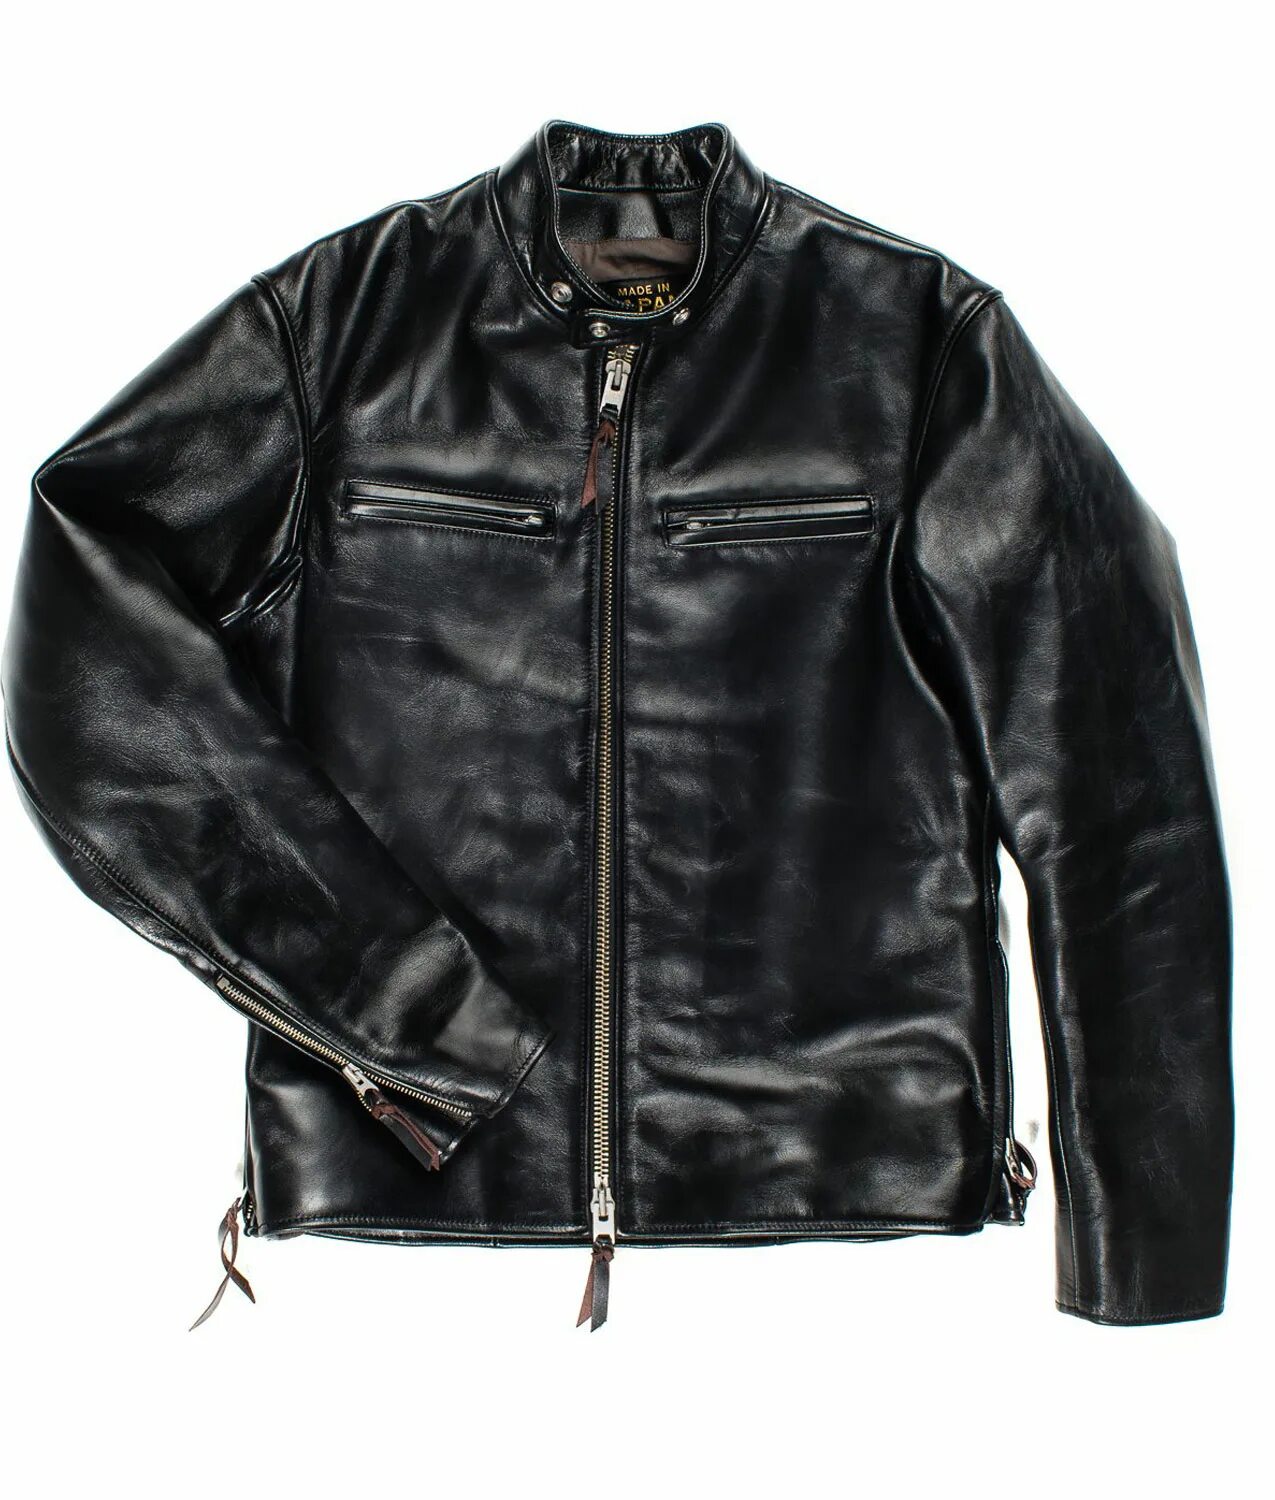 Как разгладить кожу на куртке. Iron Jacket. Измятая куртка. Iron Heart IHJ-124 Black. Как гладить кожаную куртку.